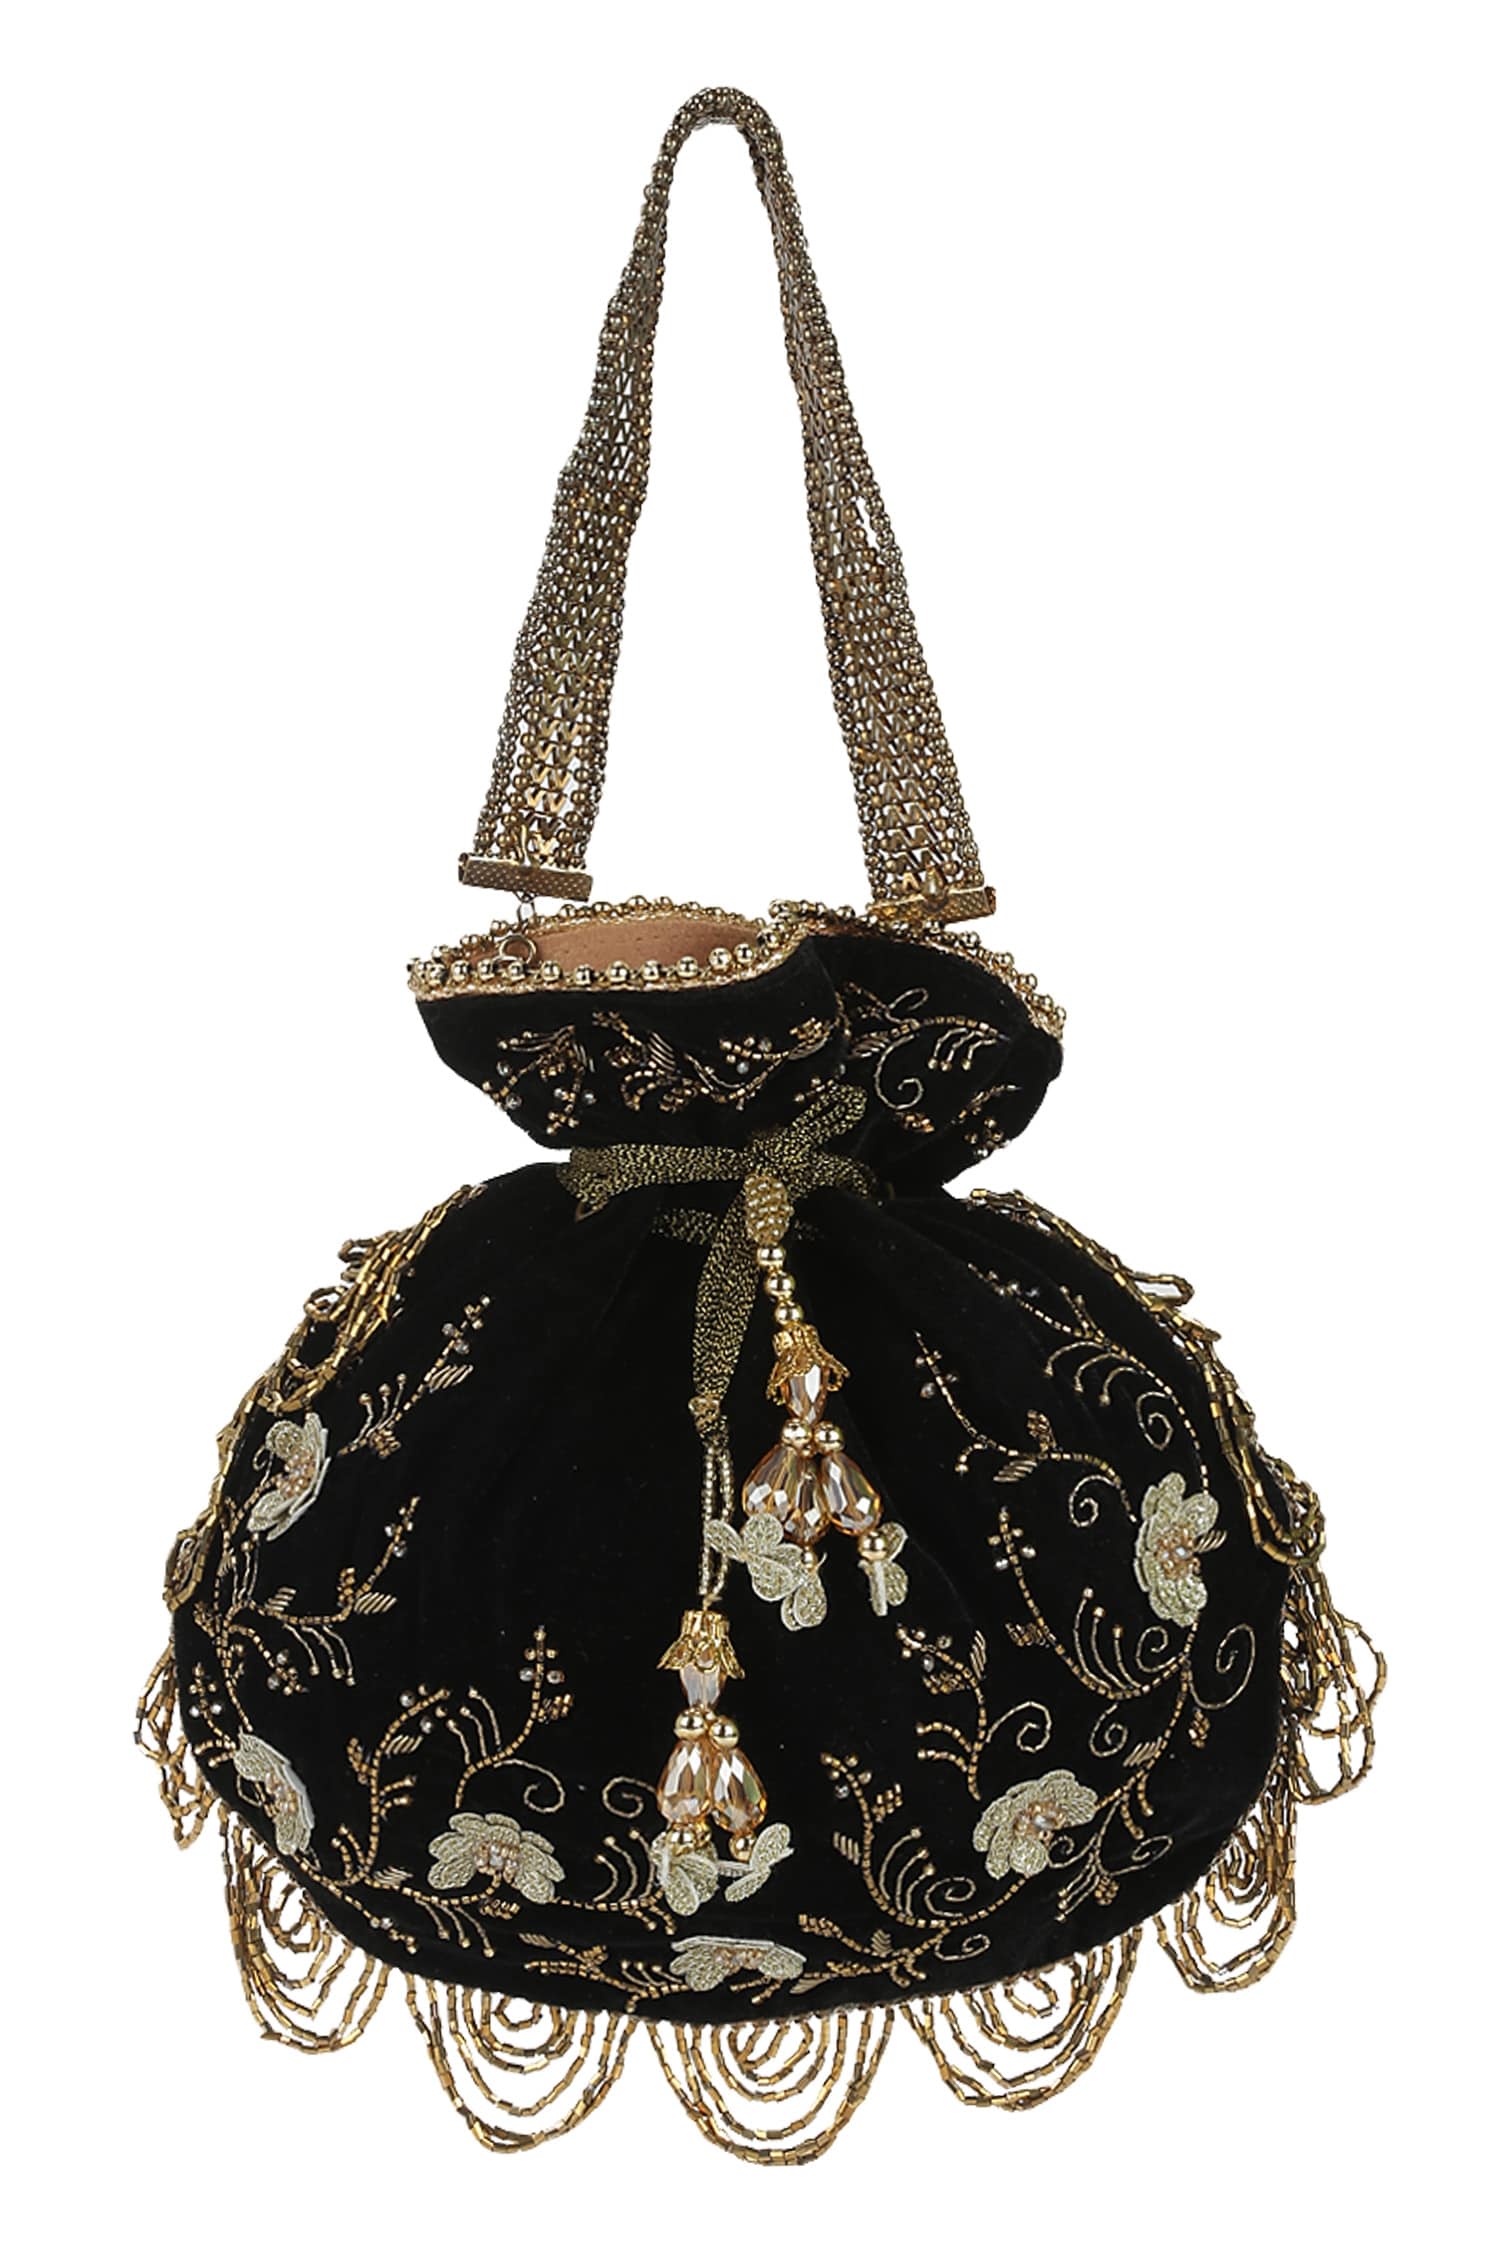 Buy Black Embellished Potli Bag by House of Vian Online at Aza Fashions.